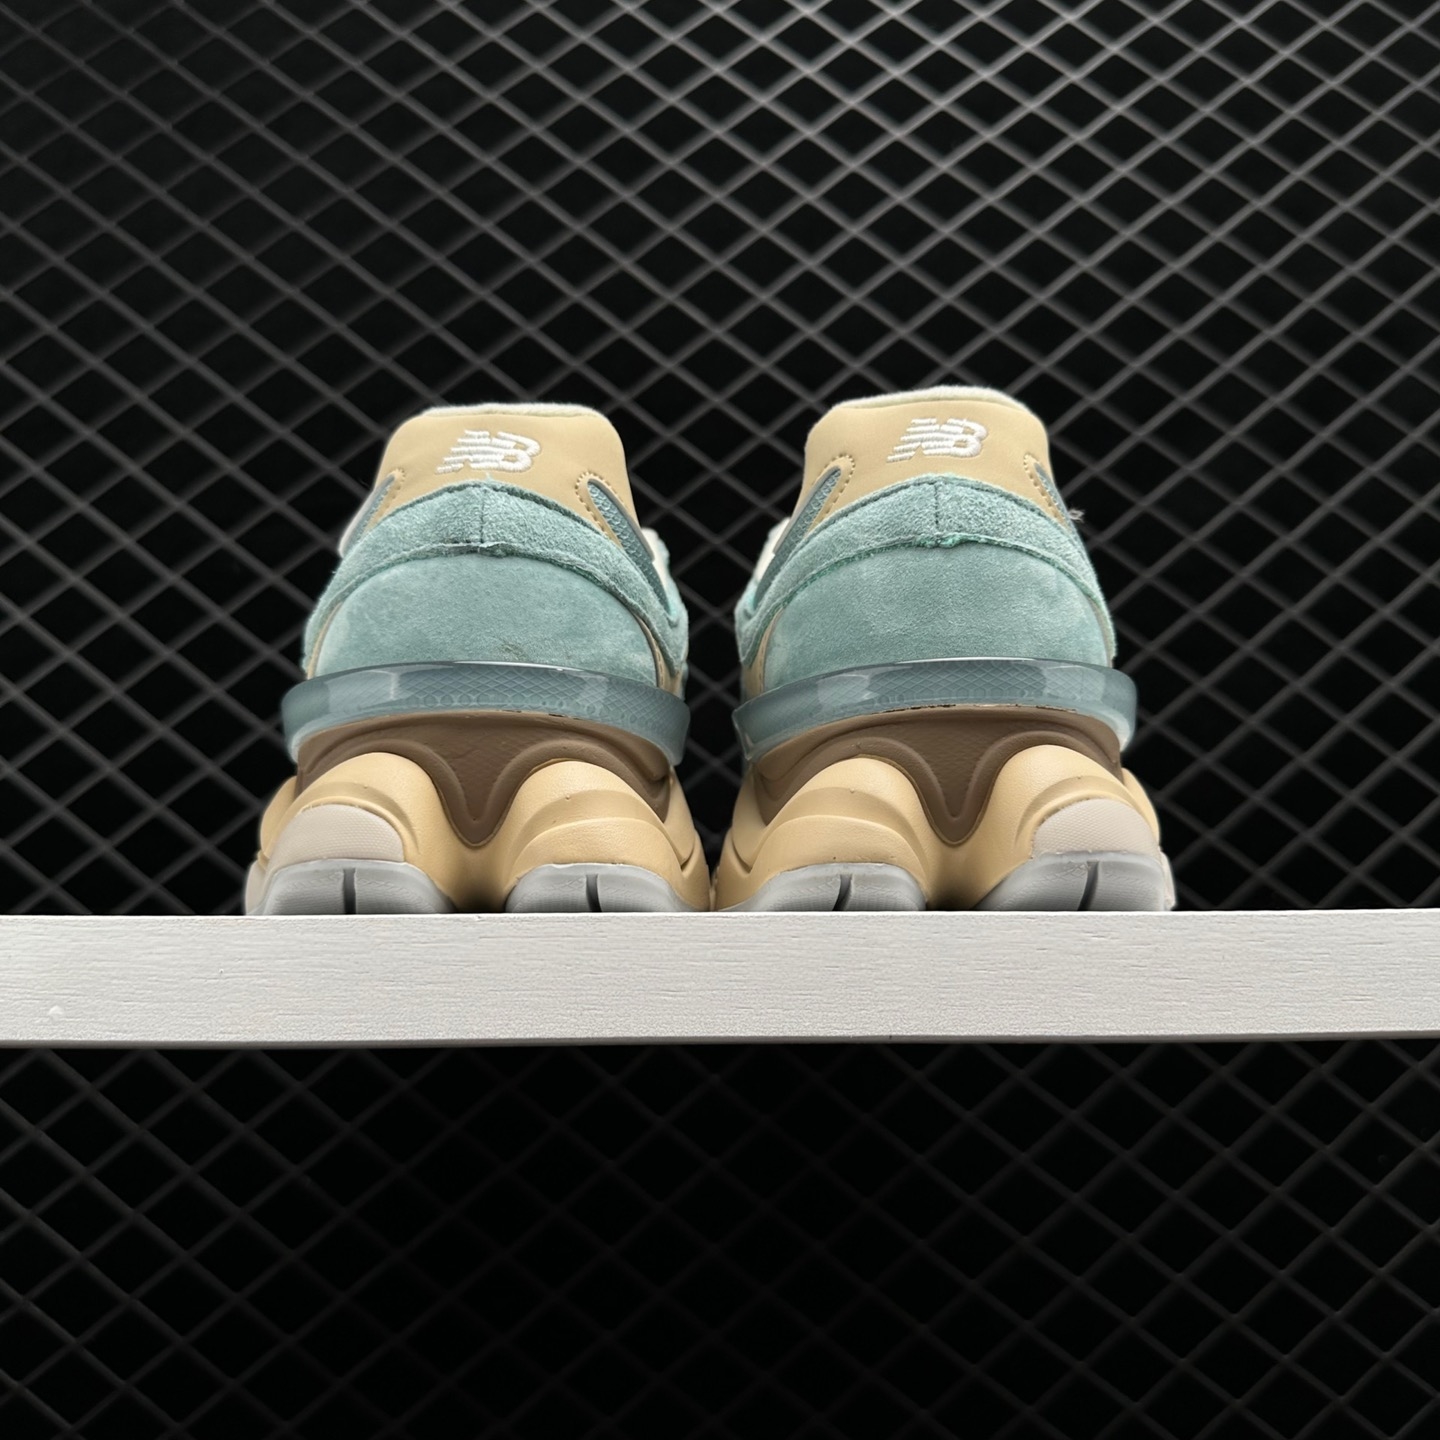 New Balance 9060 'Blue Haze' U9060FNB - Stylish and Comfortable Athletic Shoes for Men